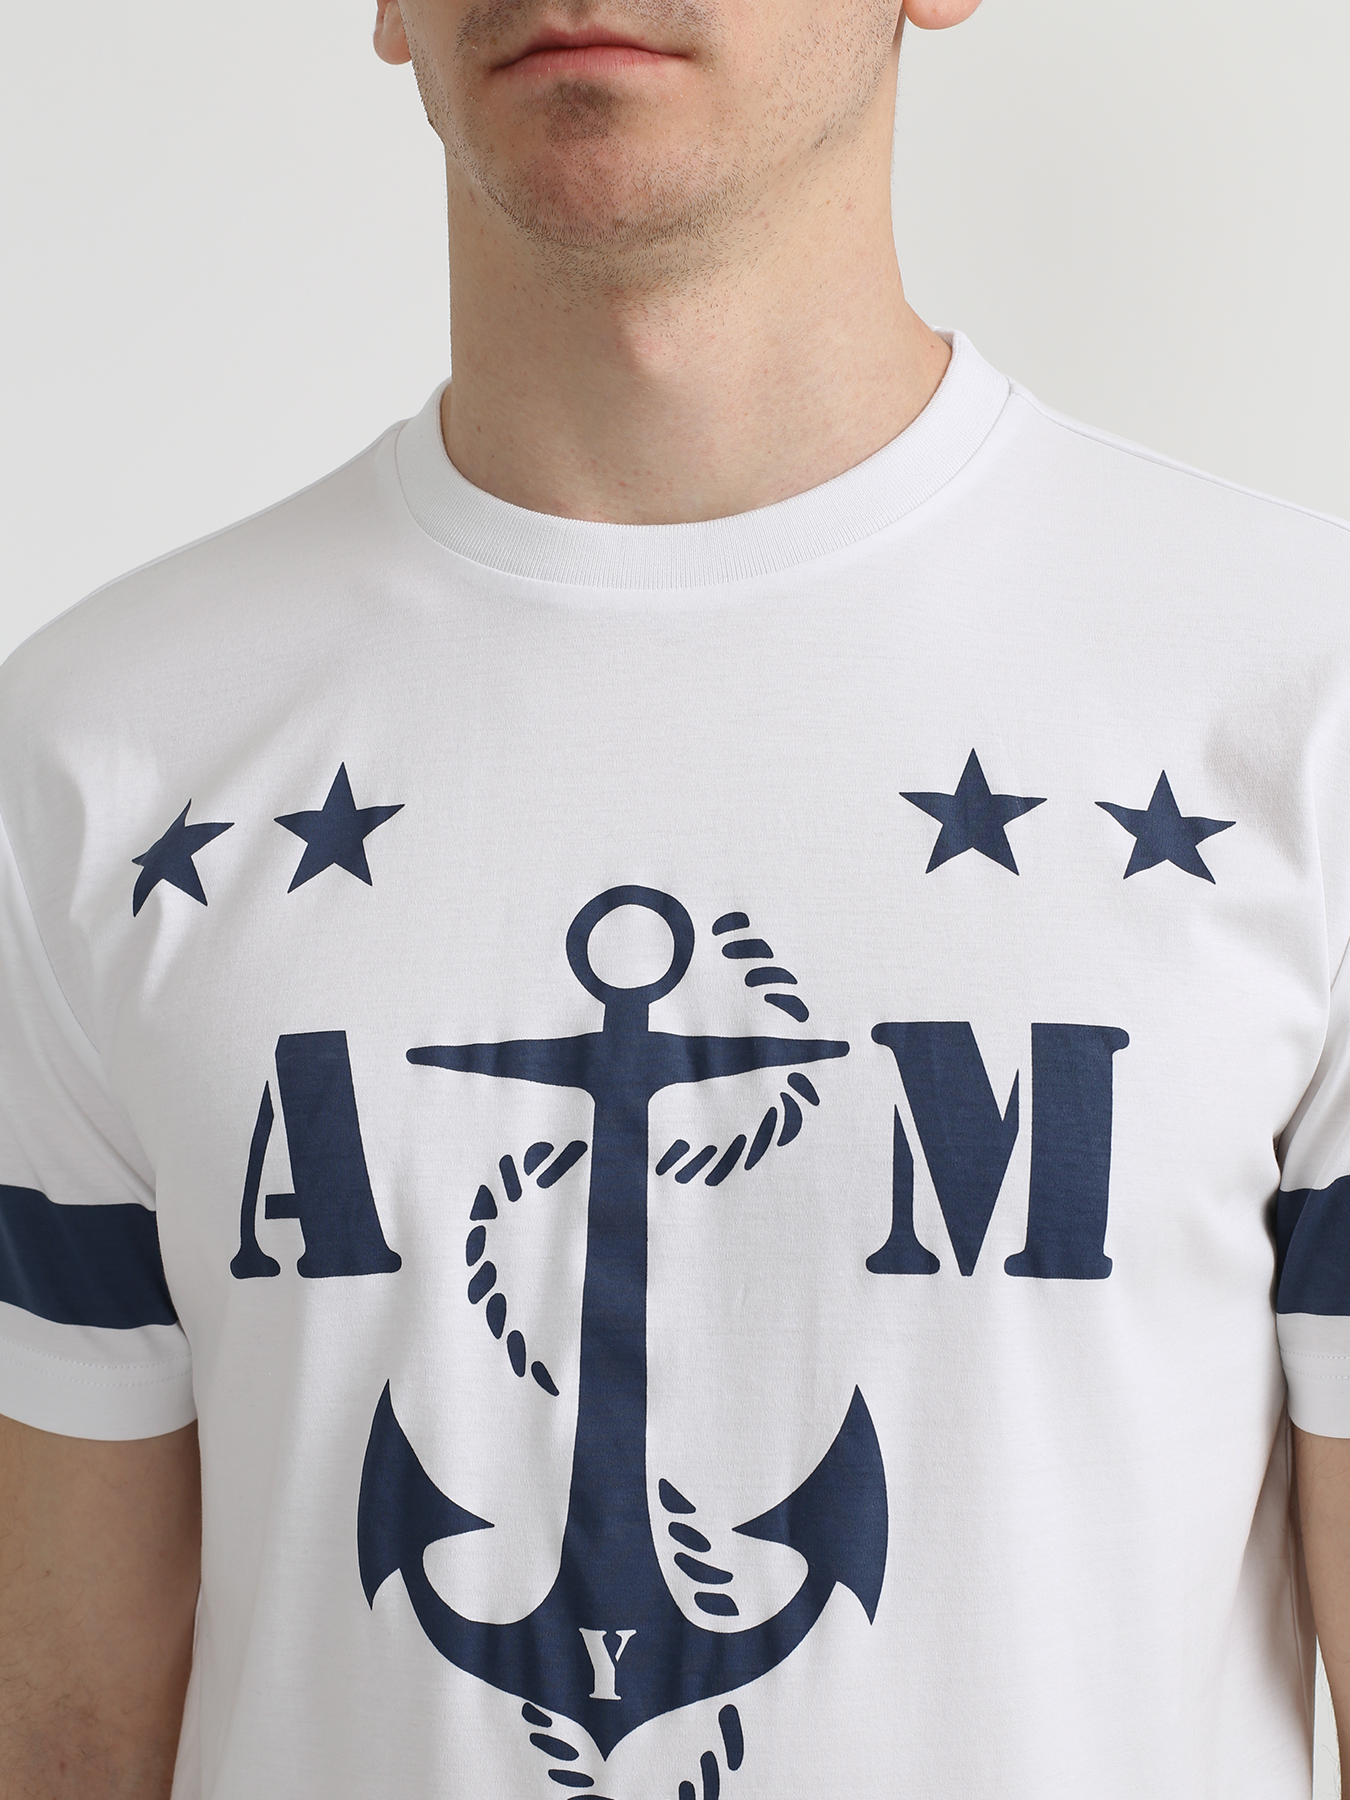 Alessandro Manzoni Yachting Хлопковая футболка с узорами 332051-025 Фото 3